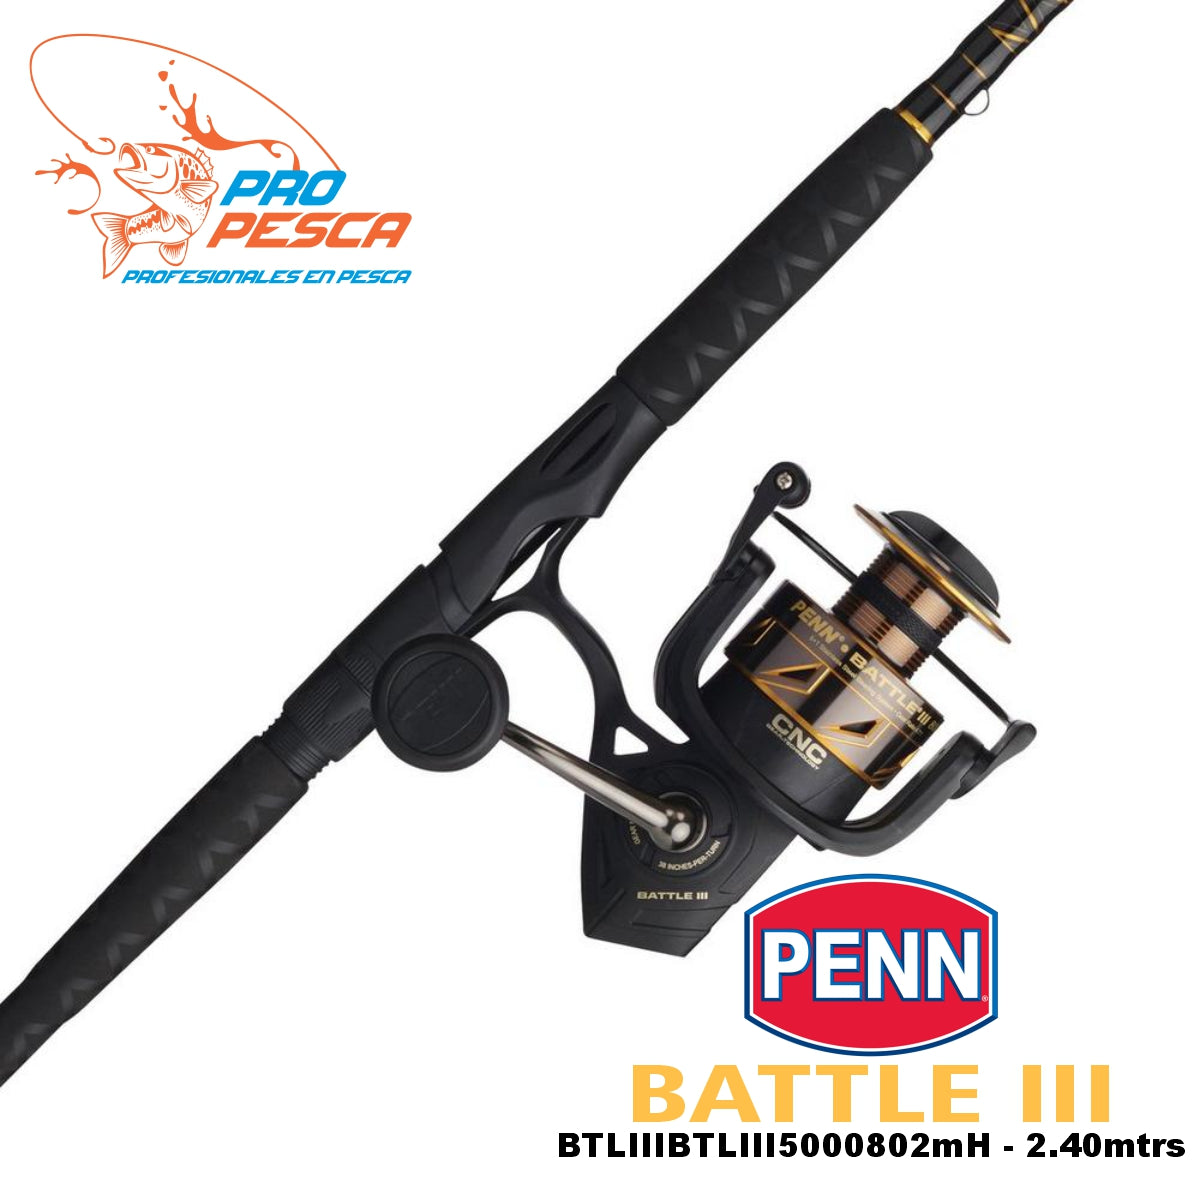 Penn Battle III Fishing Rod Reel Spinning Combo 12 Size, 50% OFF